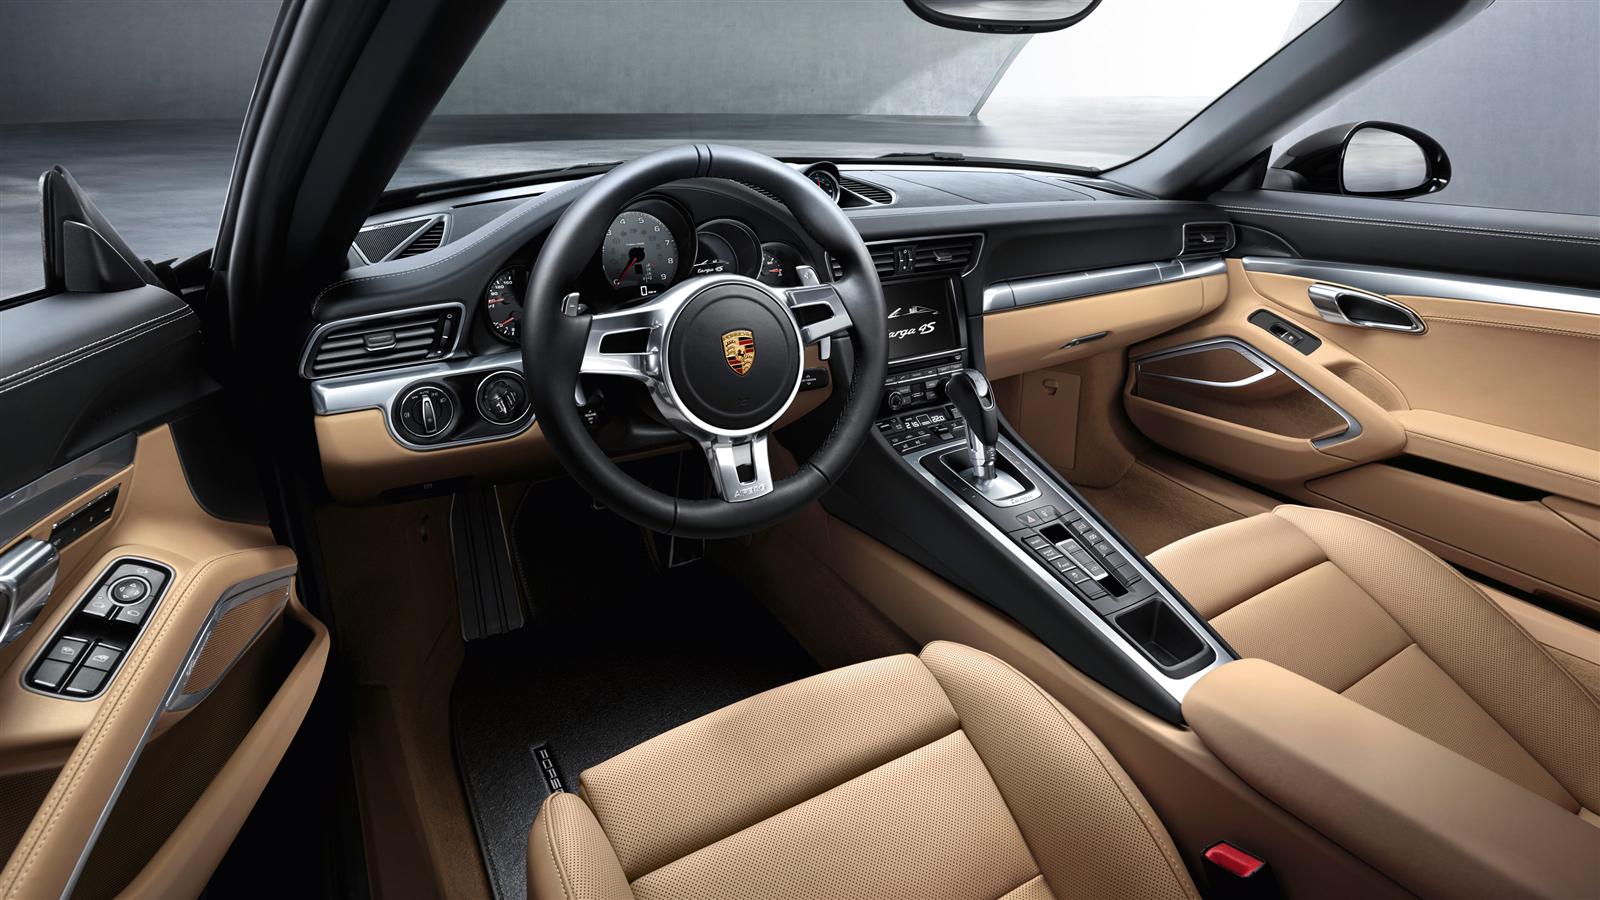 Porsche 911 Targa 4S Price in Pakistan Specifications Features Mileage Detail Pics interior design